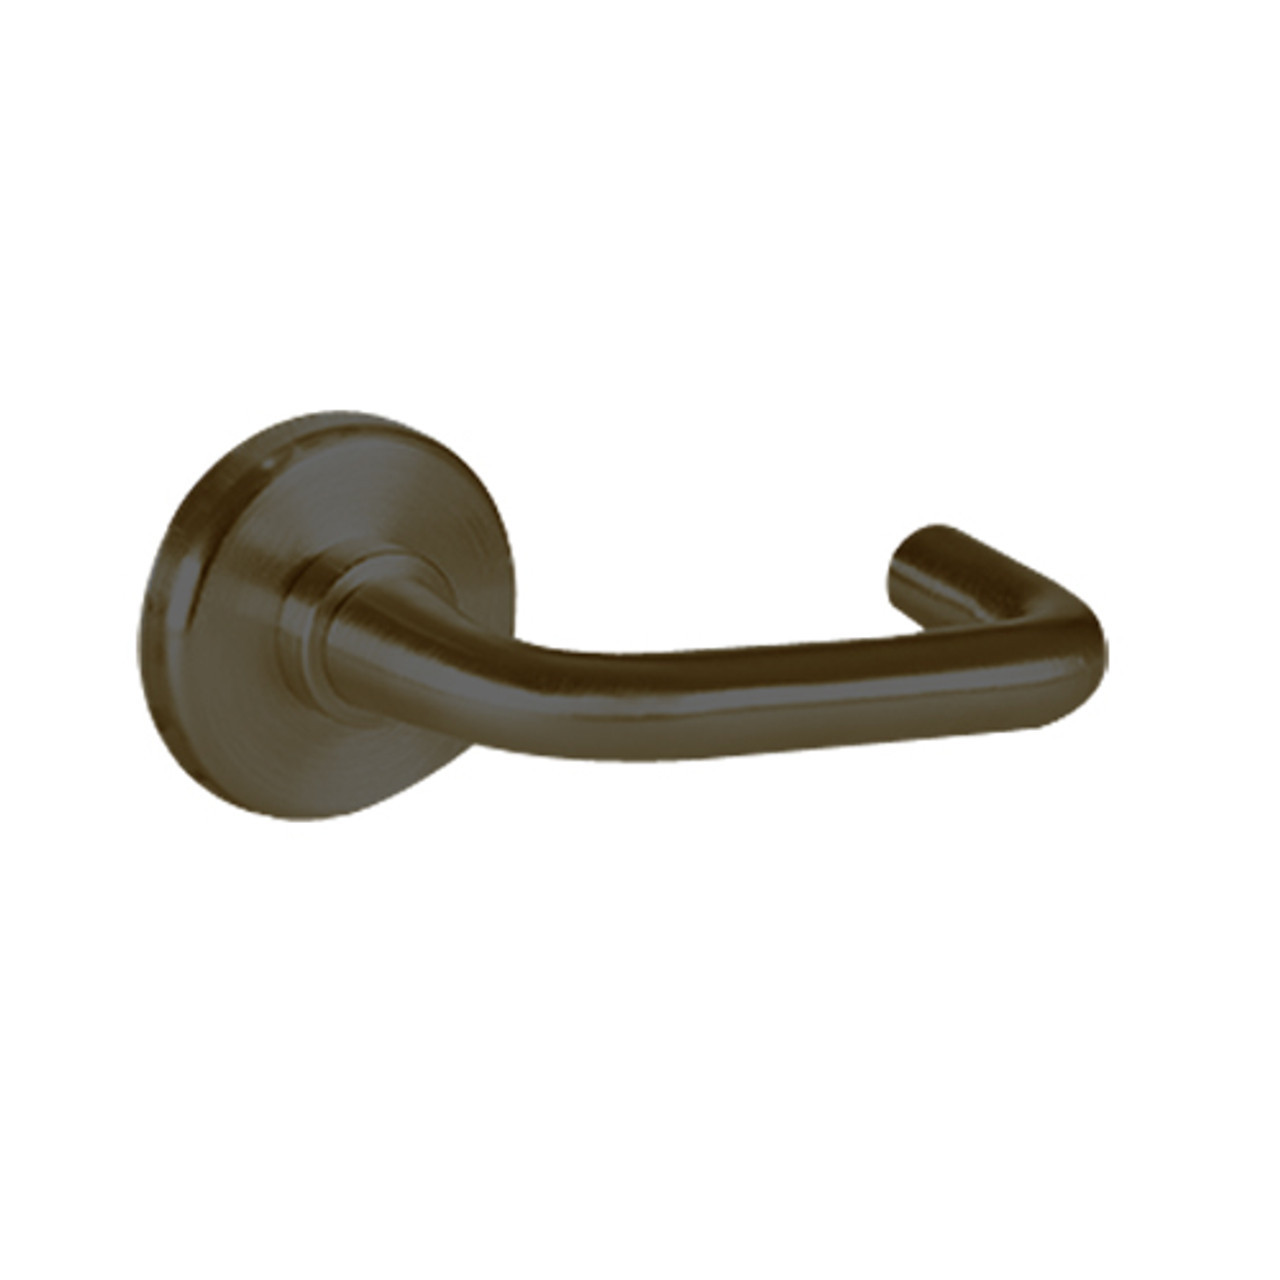 45HW7TDEL3R613 Best 40HW series Single Key Deadbolt Fail Safe Electromechanical Mortise Lever Lock with Solid Tube w/ Return Style in Oil Rubbed Bronze